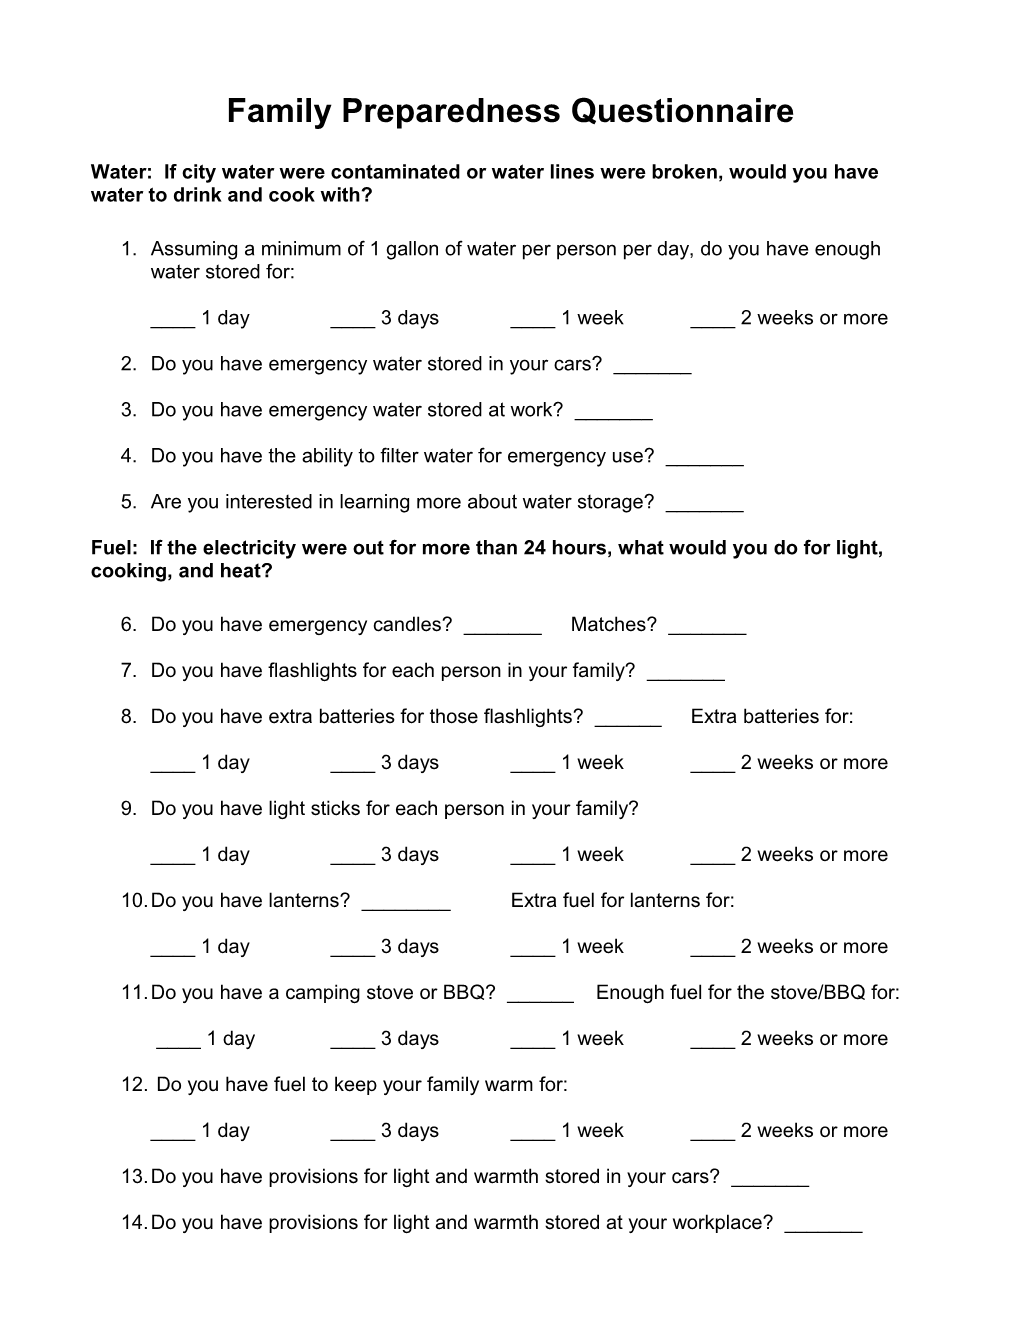 Family Preparedness Questionnaire